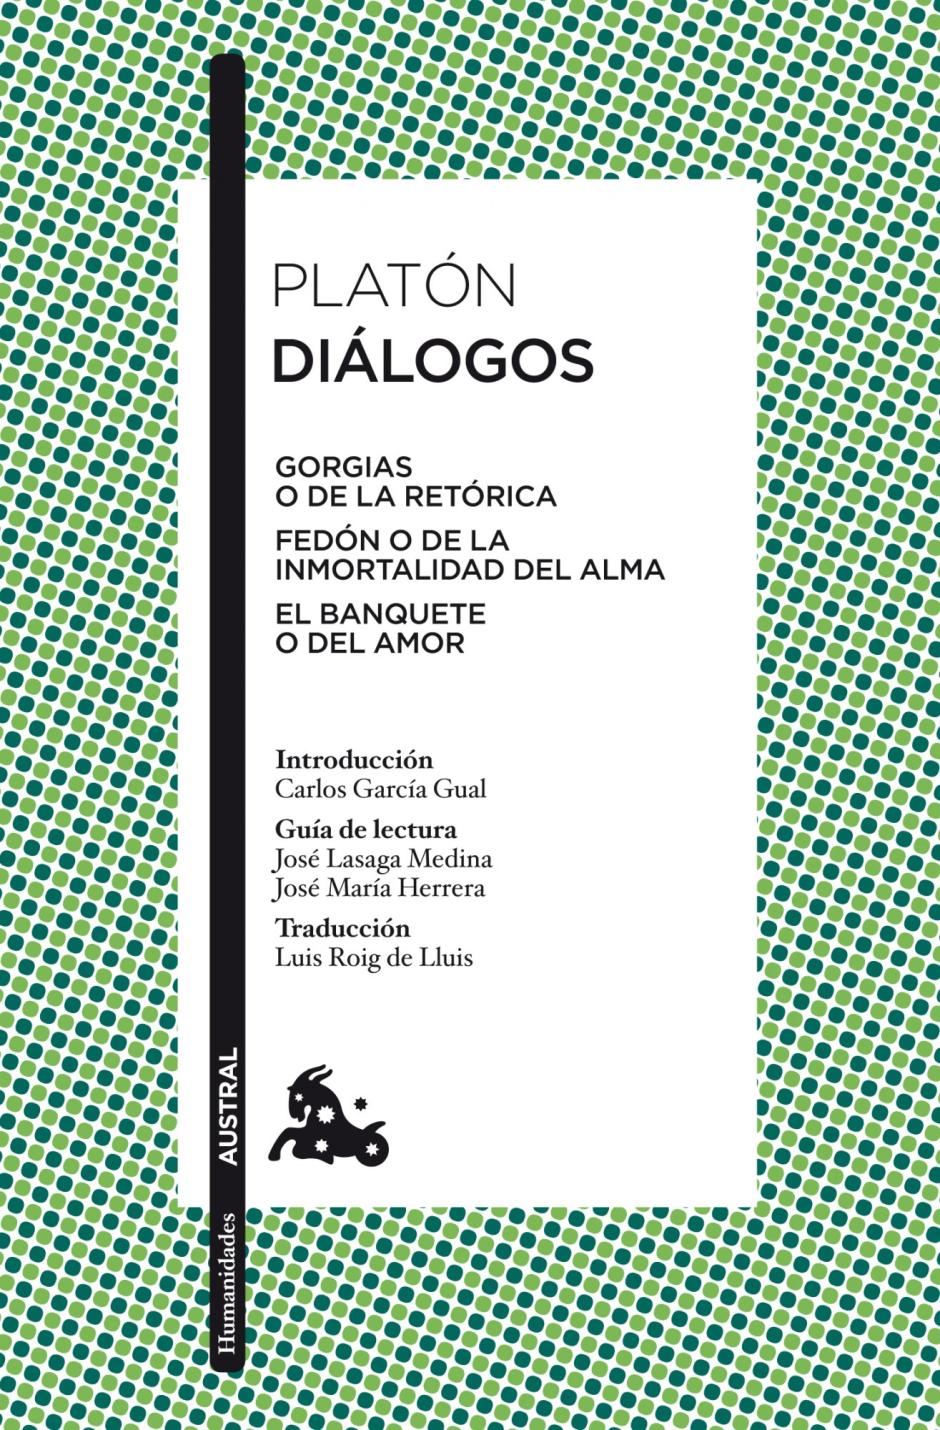 Selección de los "Diálogos" de Platón